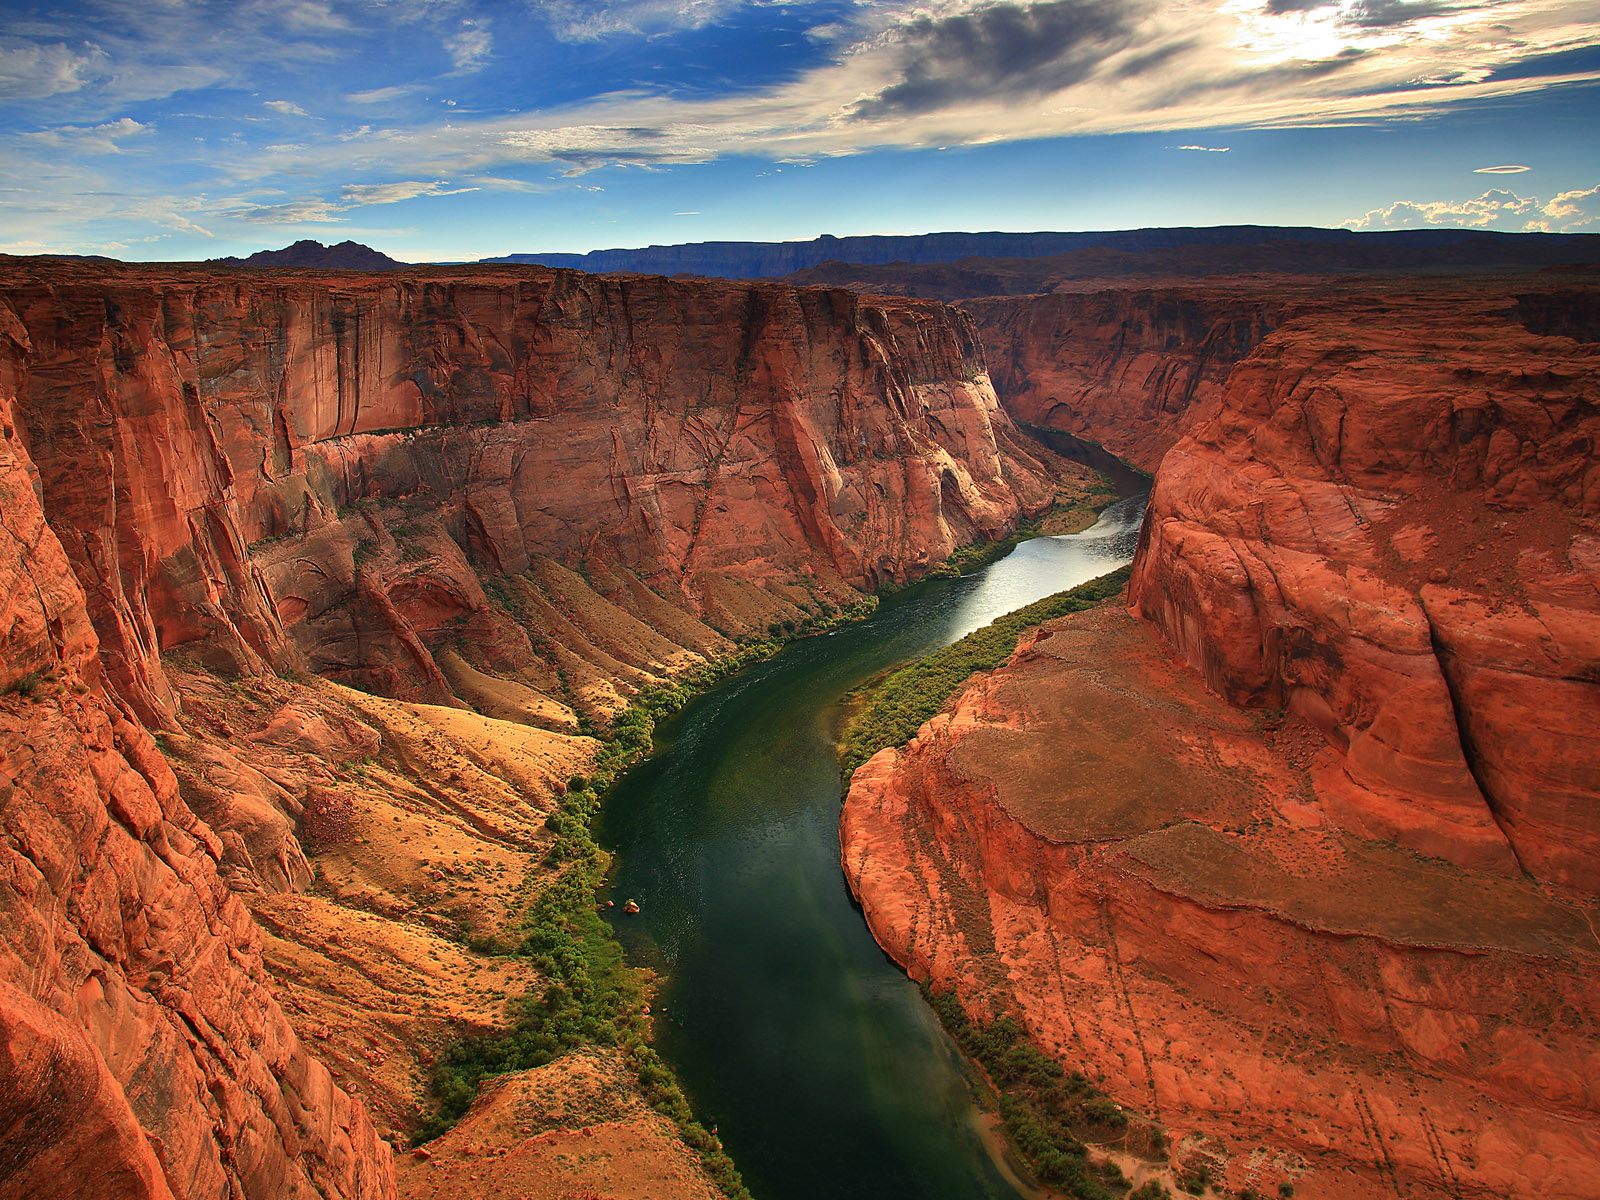  Colorado River Page Arizona   Arizona Photography Desktop Wallpapers